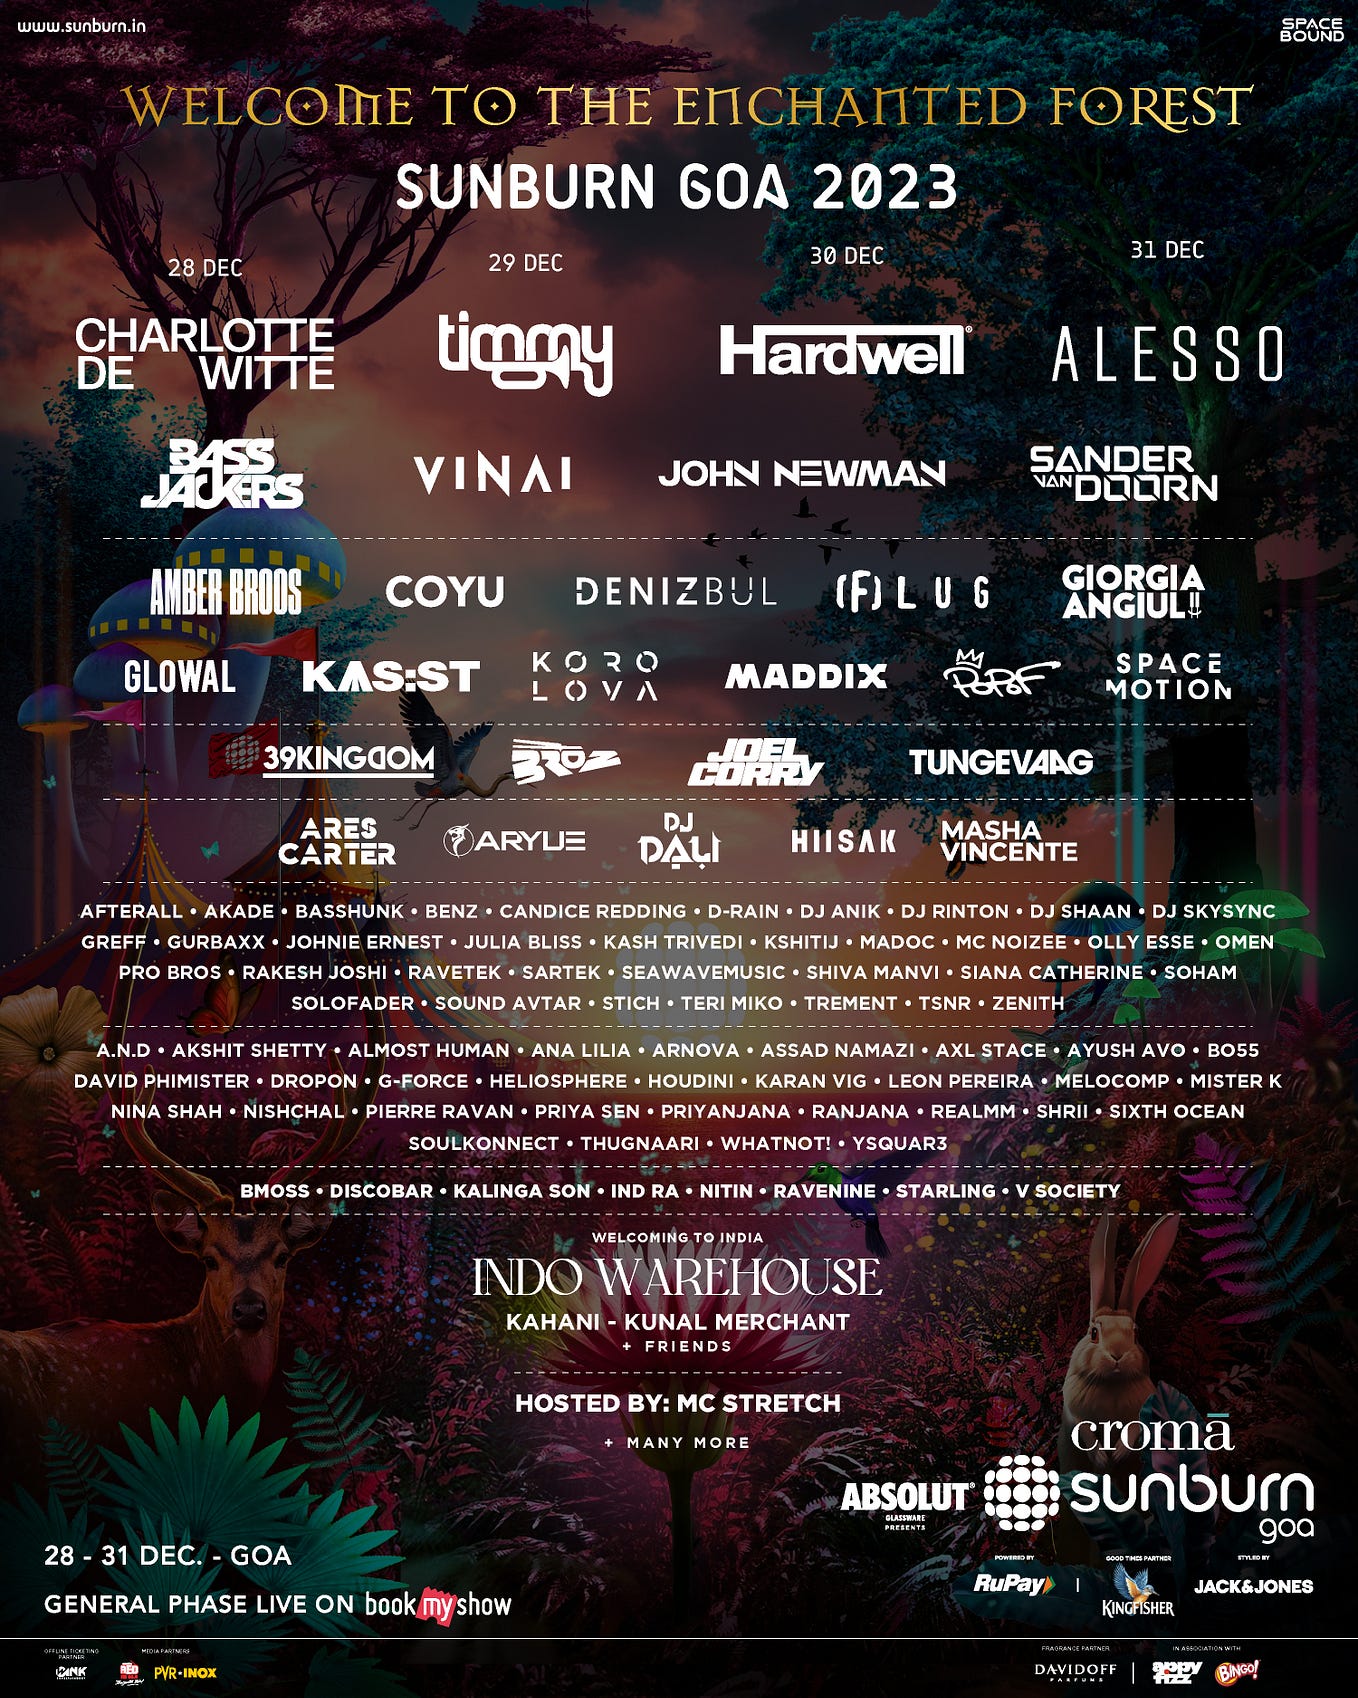 Sunburn Goa 2023 Unveils Full Artist Line Up And The Venue